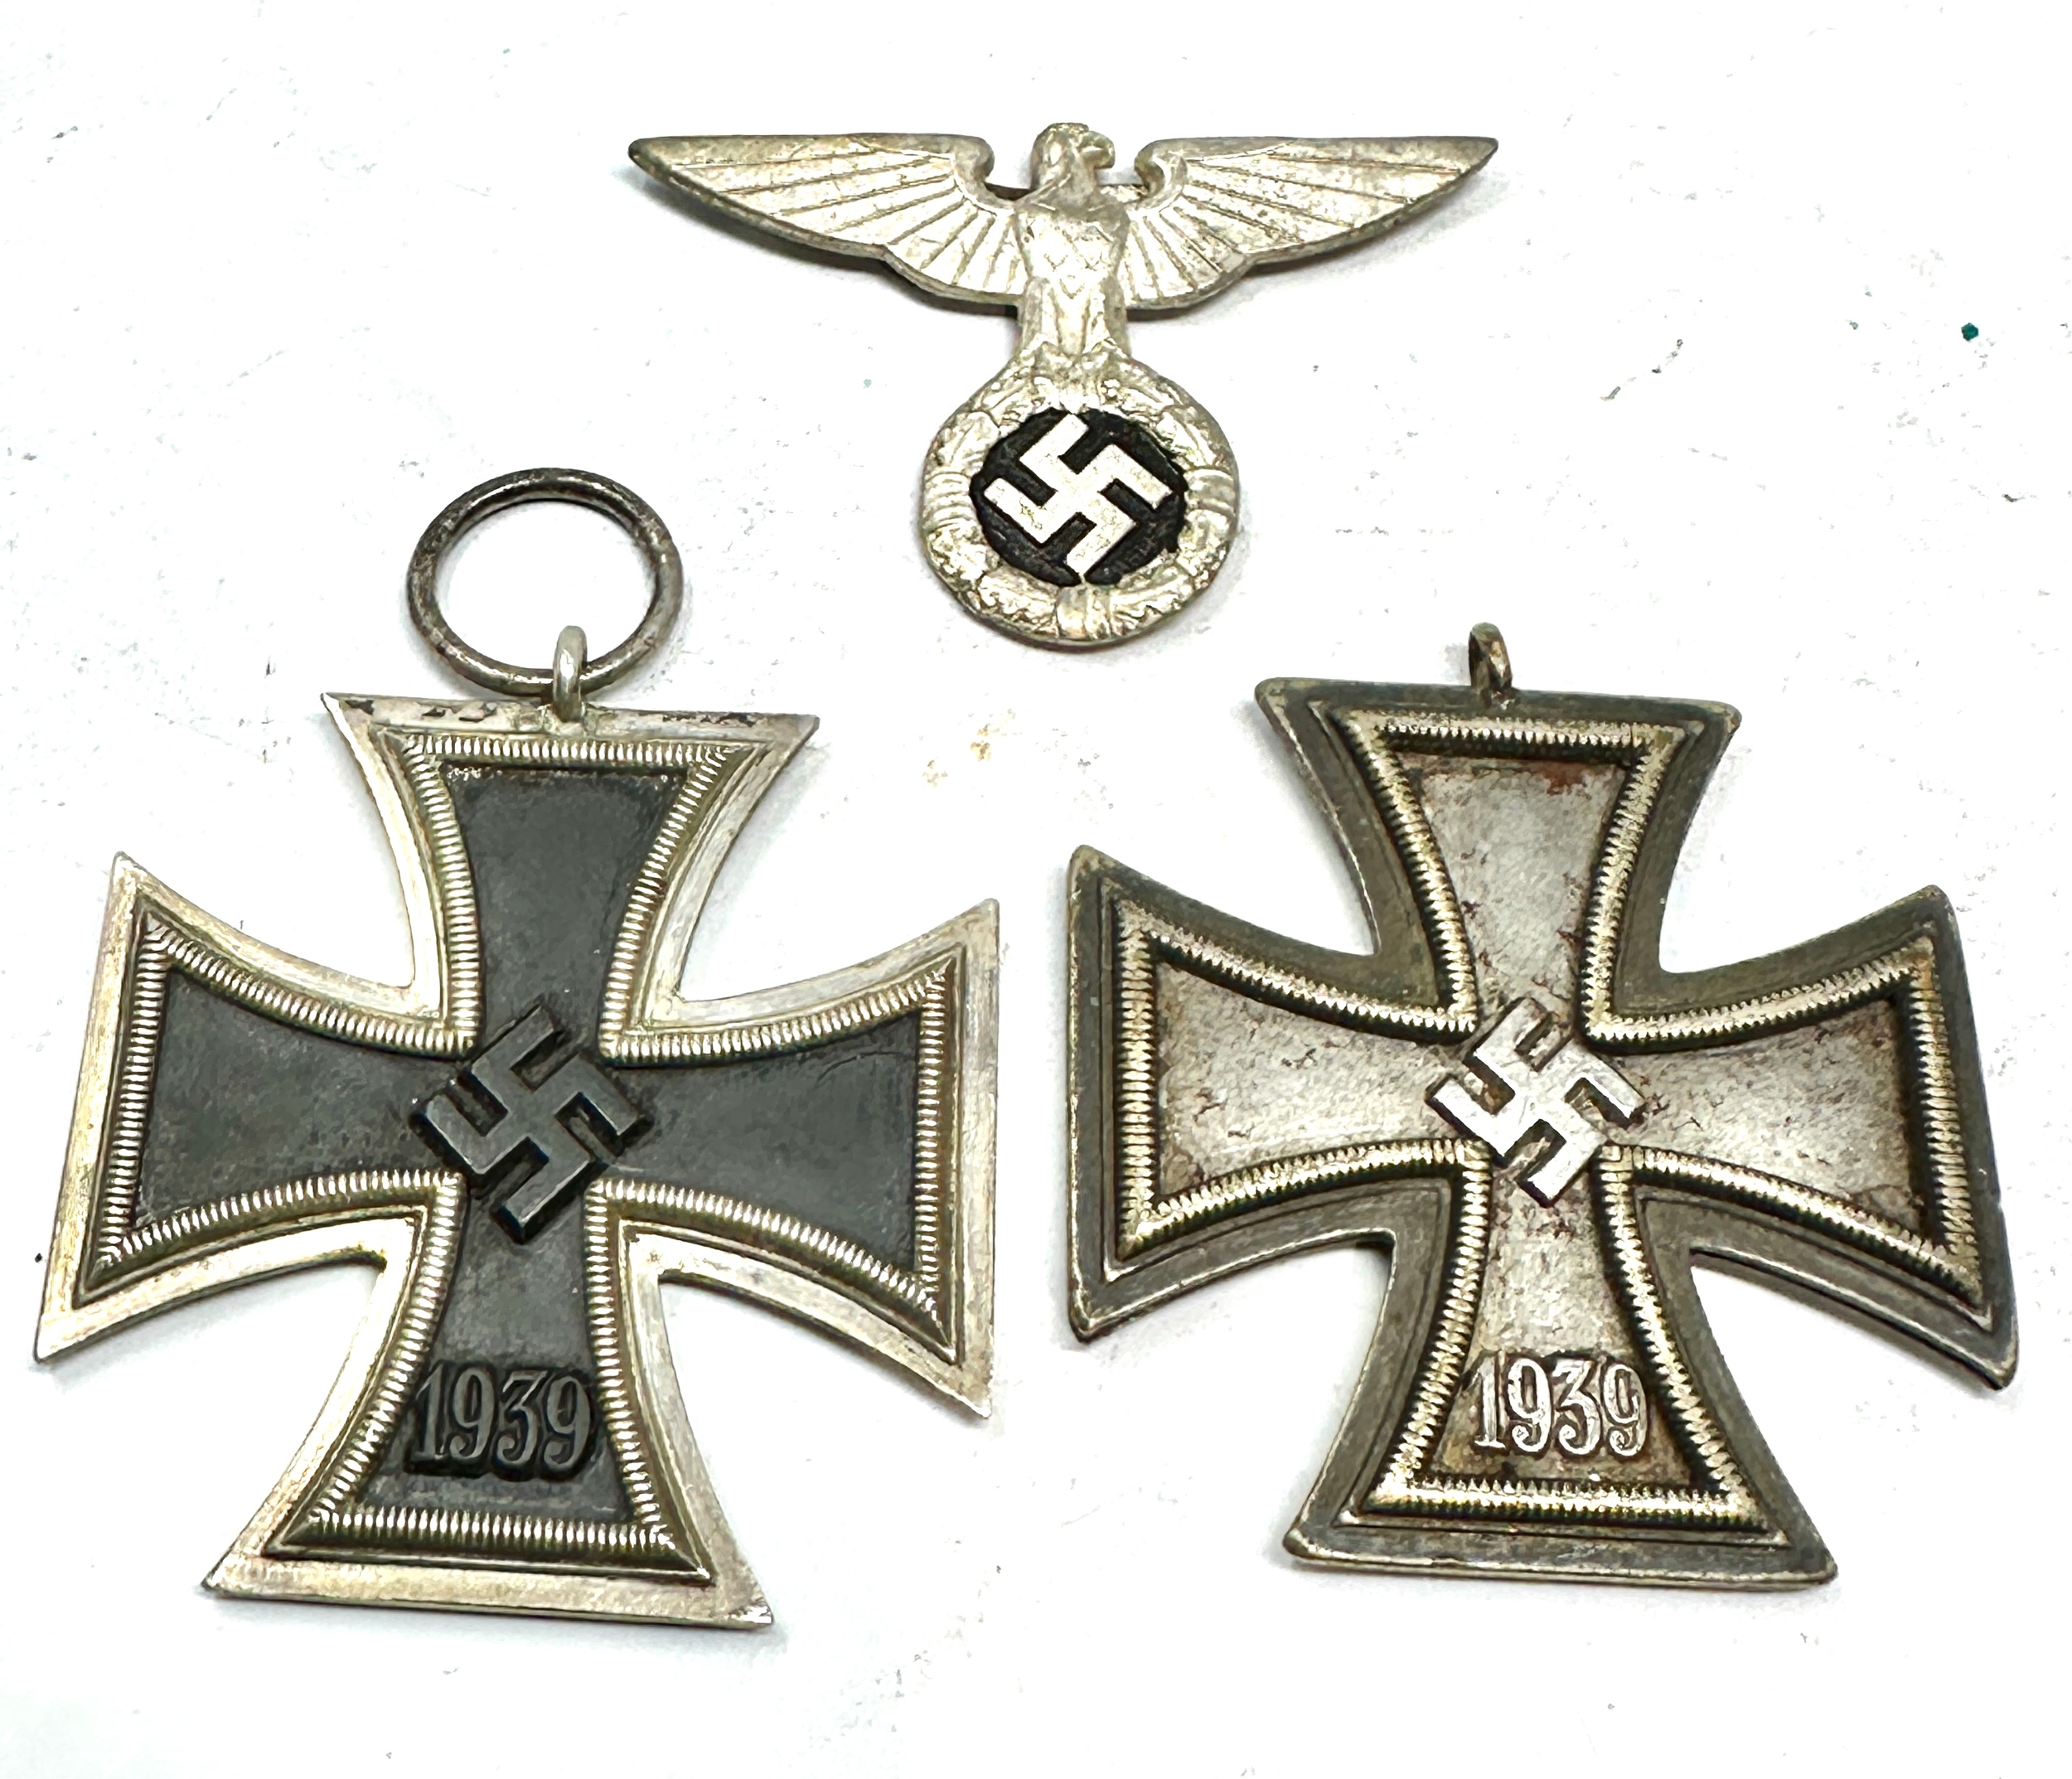 2 ww2 german iron crosses and cap eagle